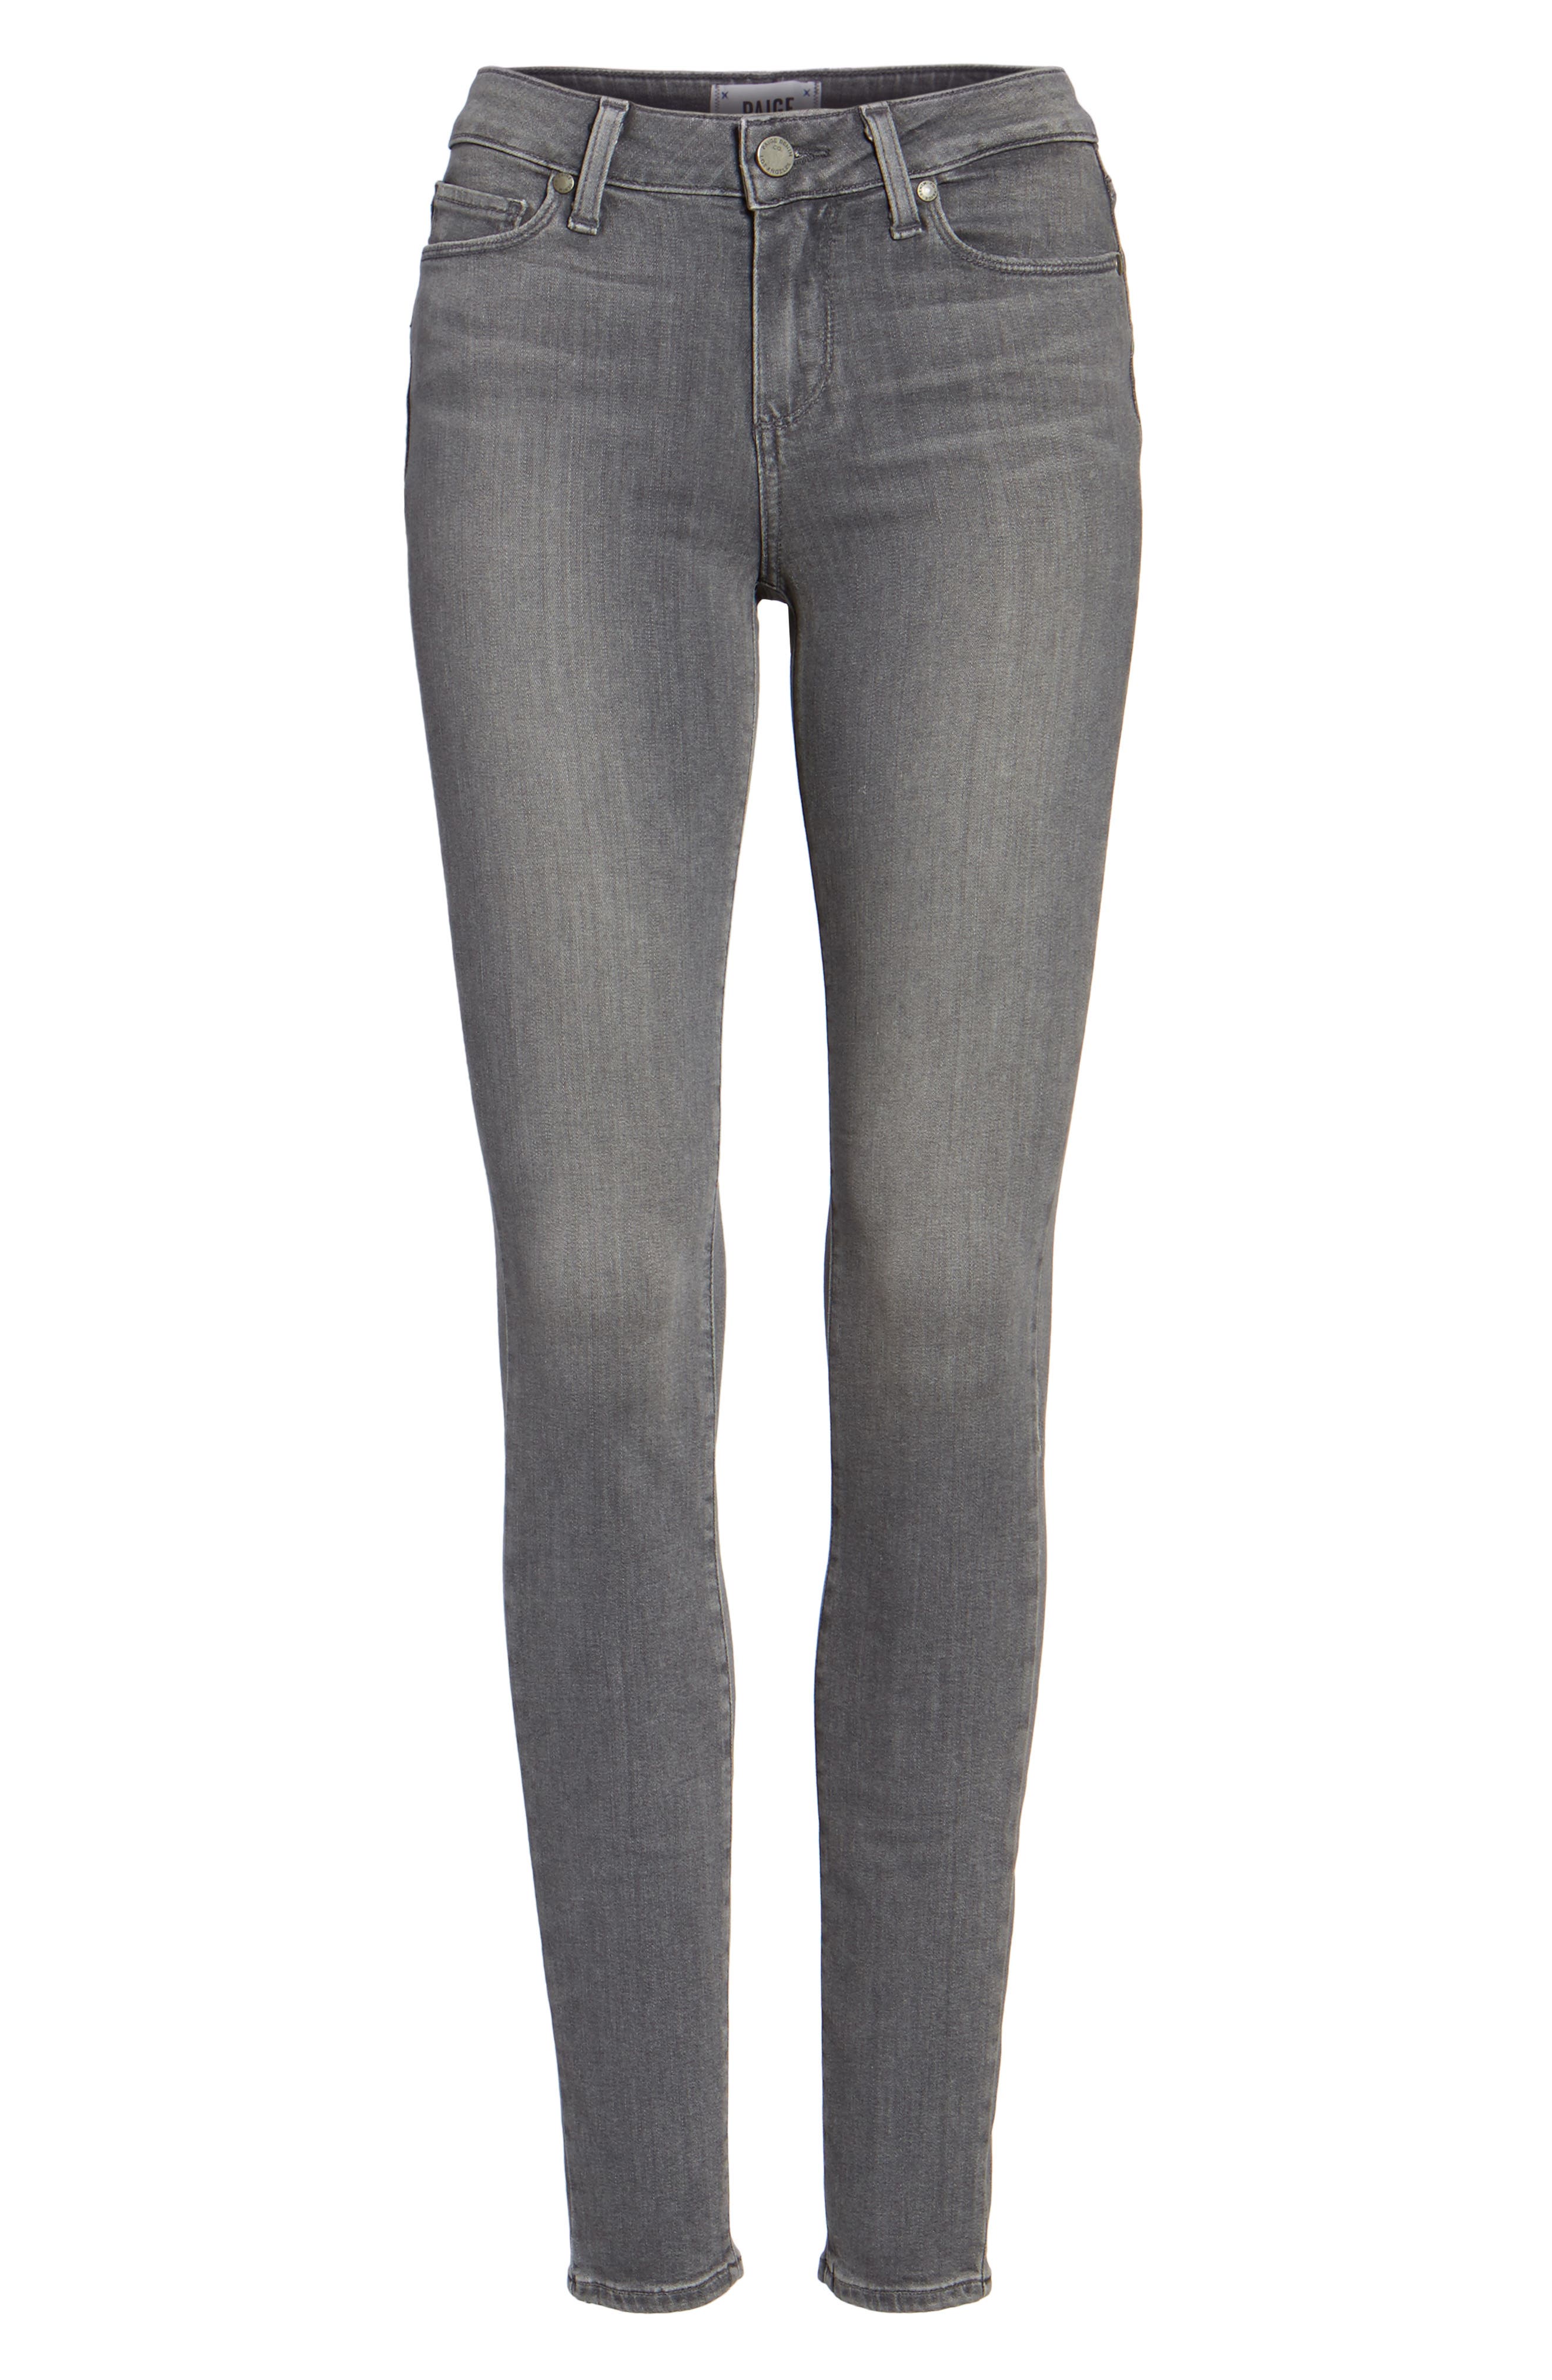 paige verdugo ultra skinny jeans